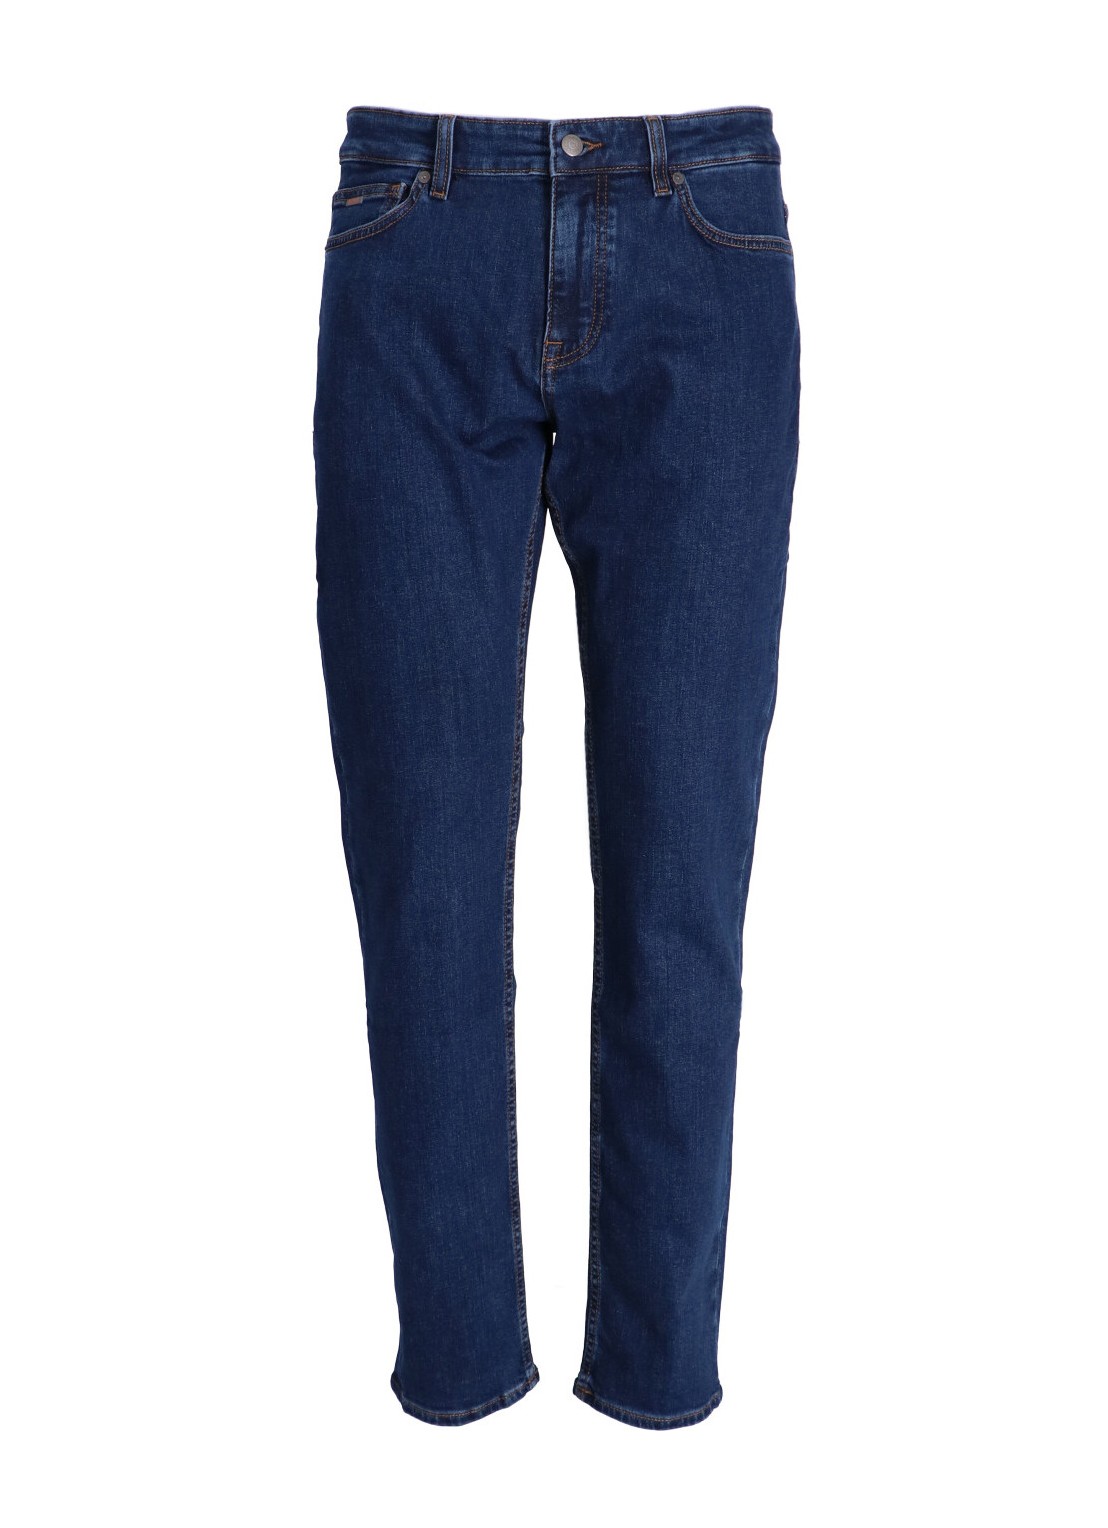 Pantalon jeans boss denim man delaware bc-c 50506700 416 talla Azul
 